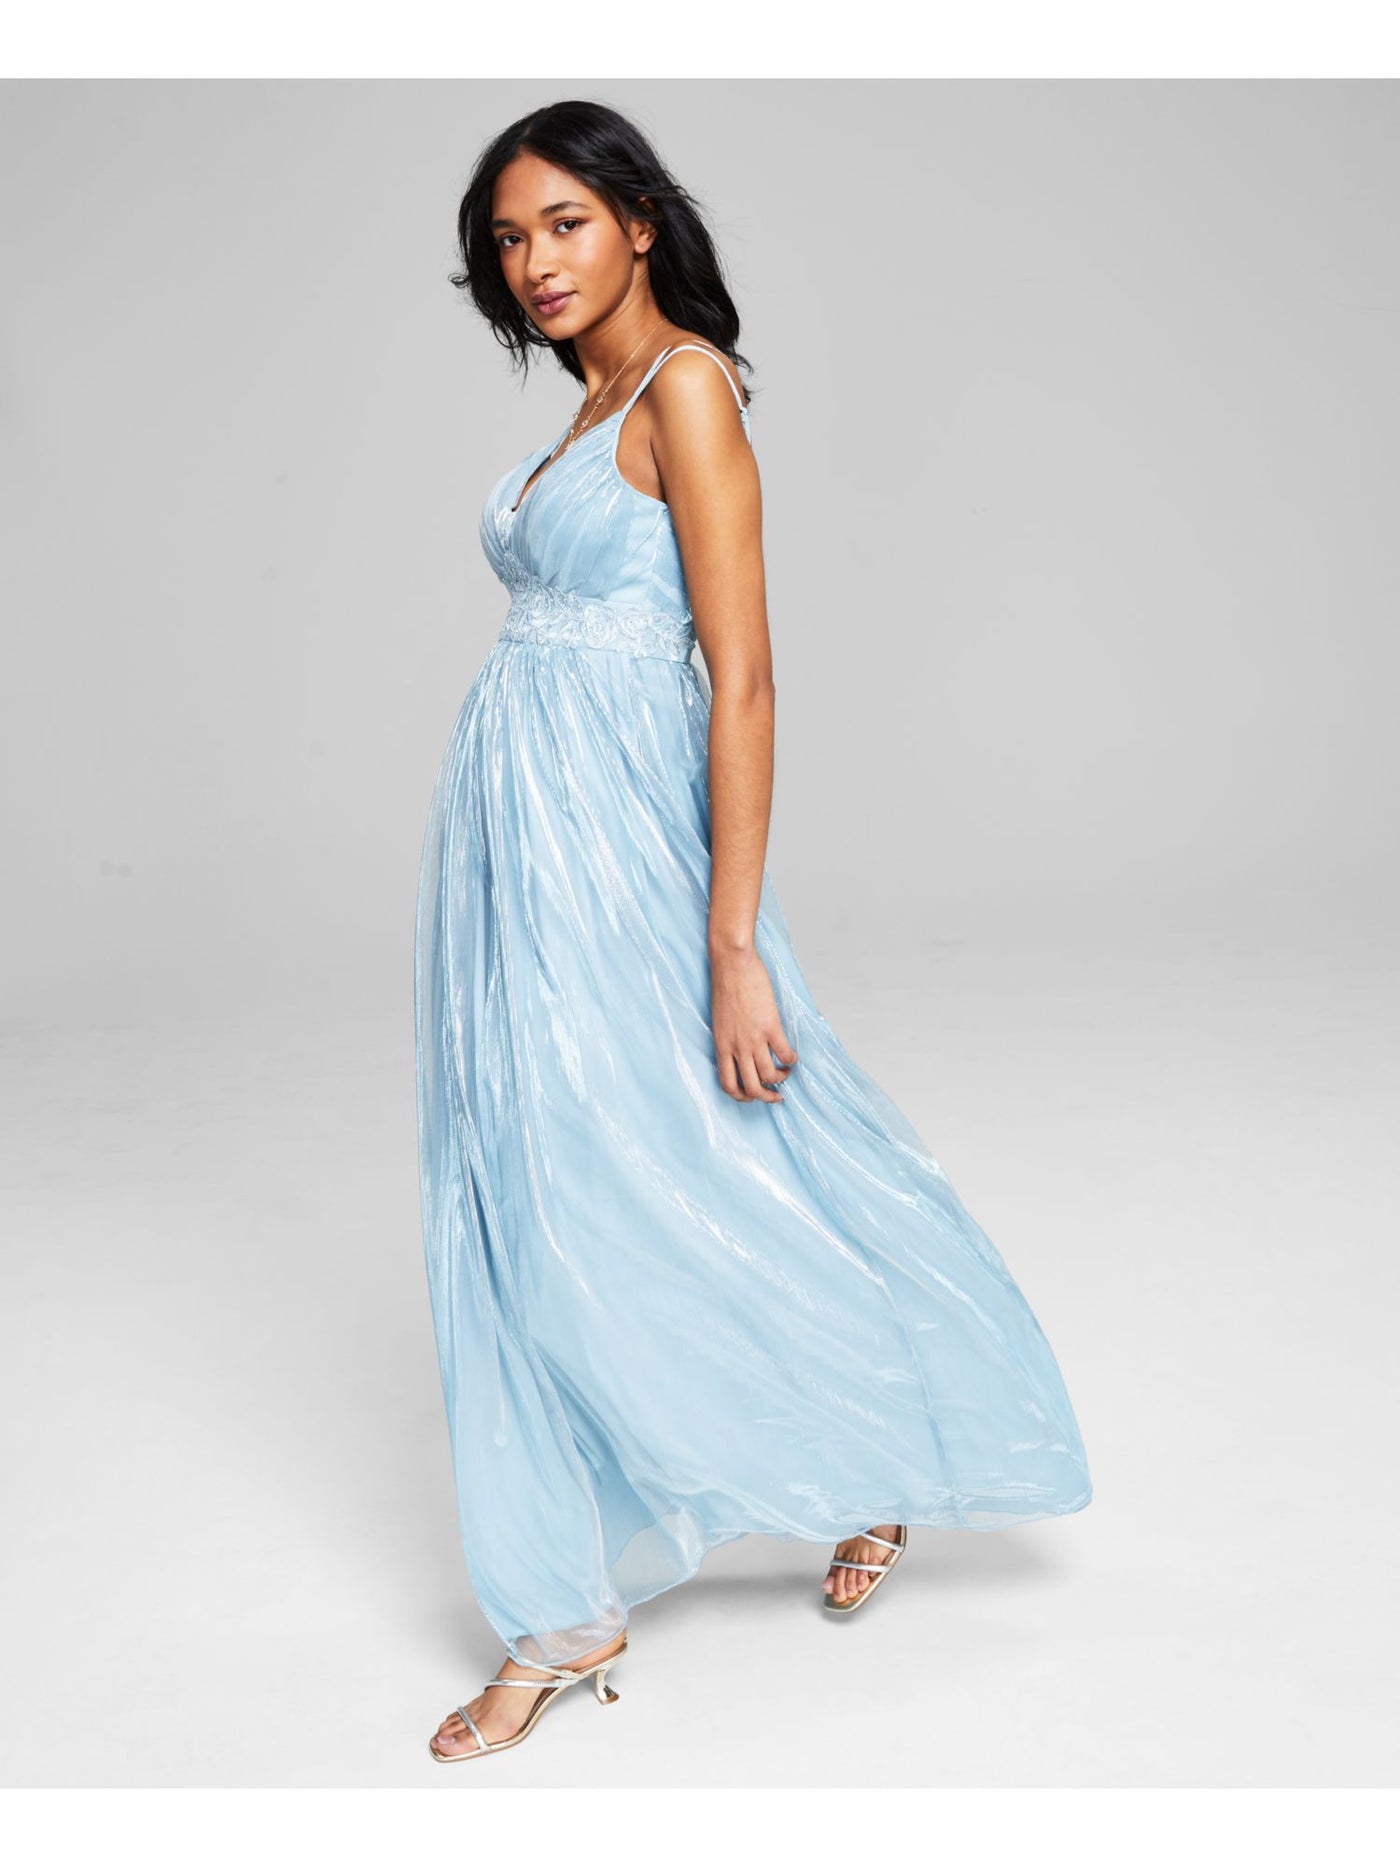 TEEZE ME Womens Light Blue Embroidered Beaded Zippered Lined Sleeveless V Neck Full-Length  Gown Prom Dress Juniors 7\8